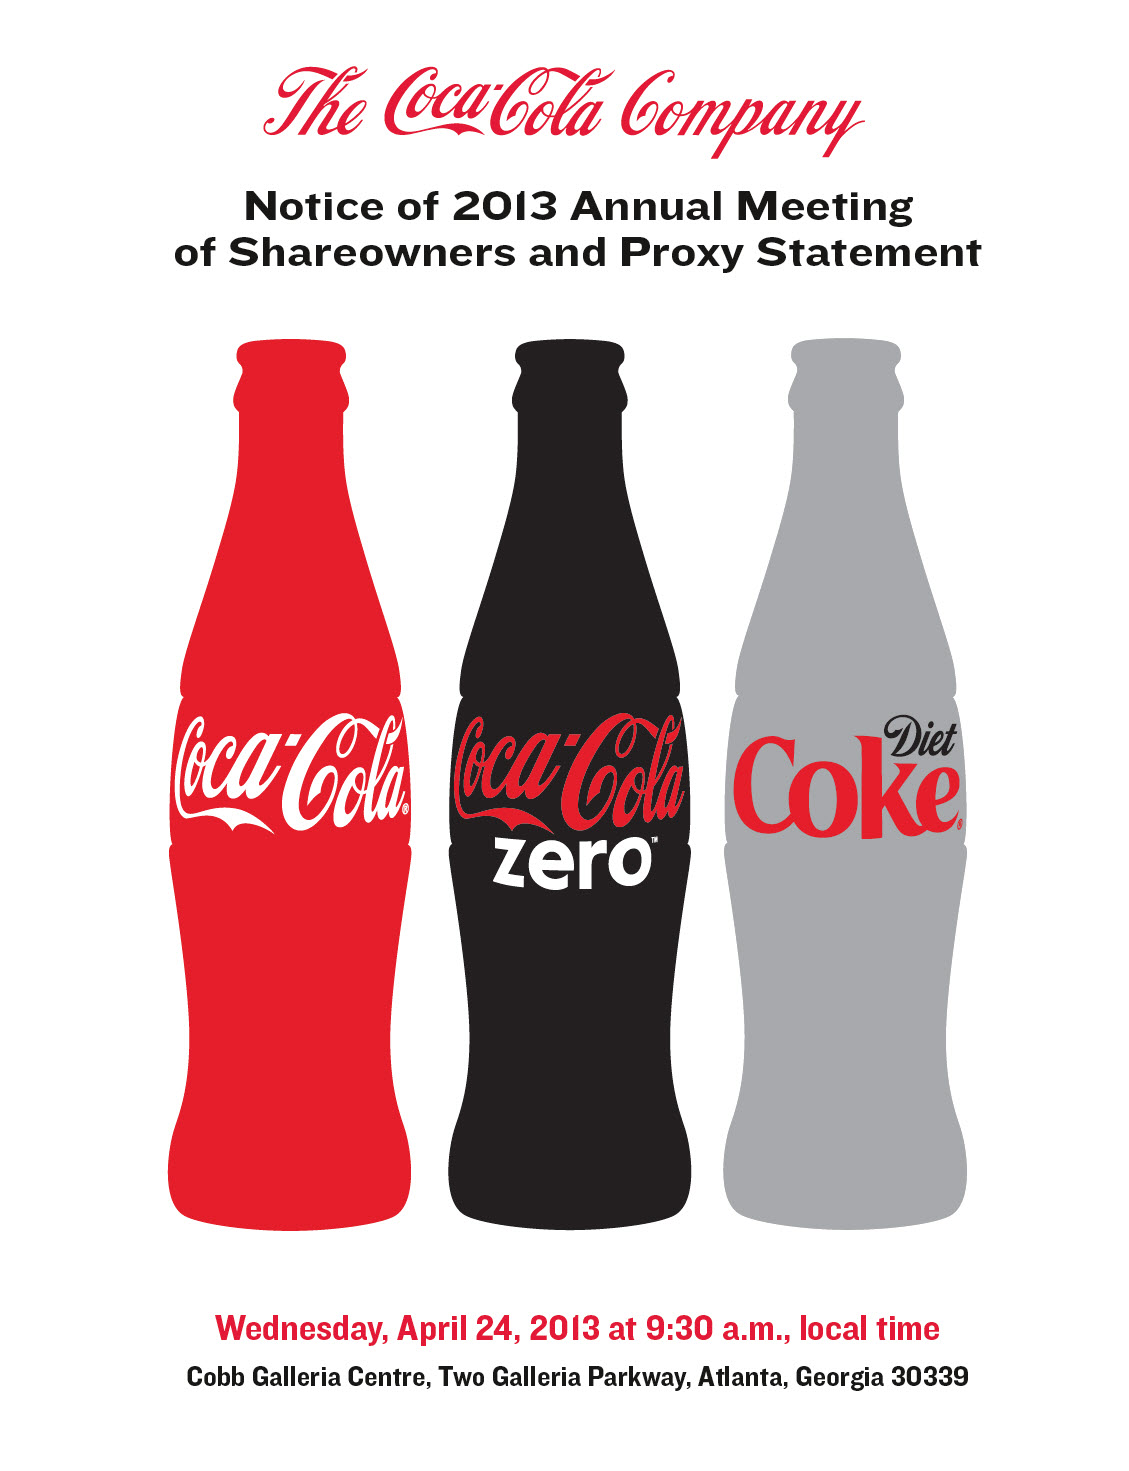 the coca cola company def 14a big 5 accounting firms